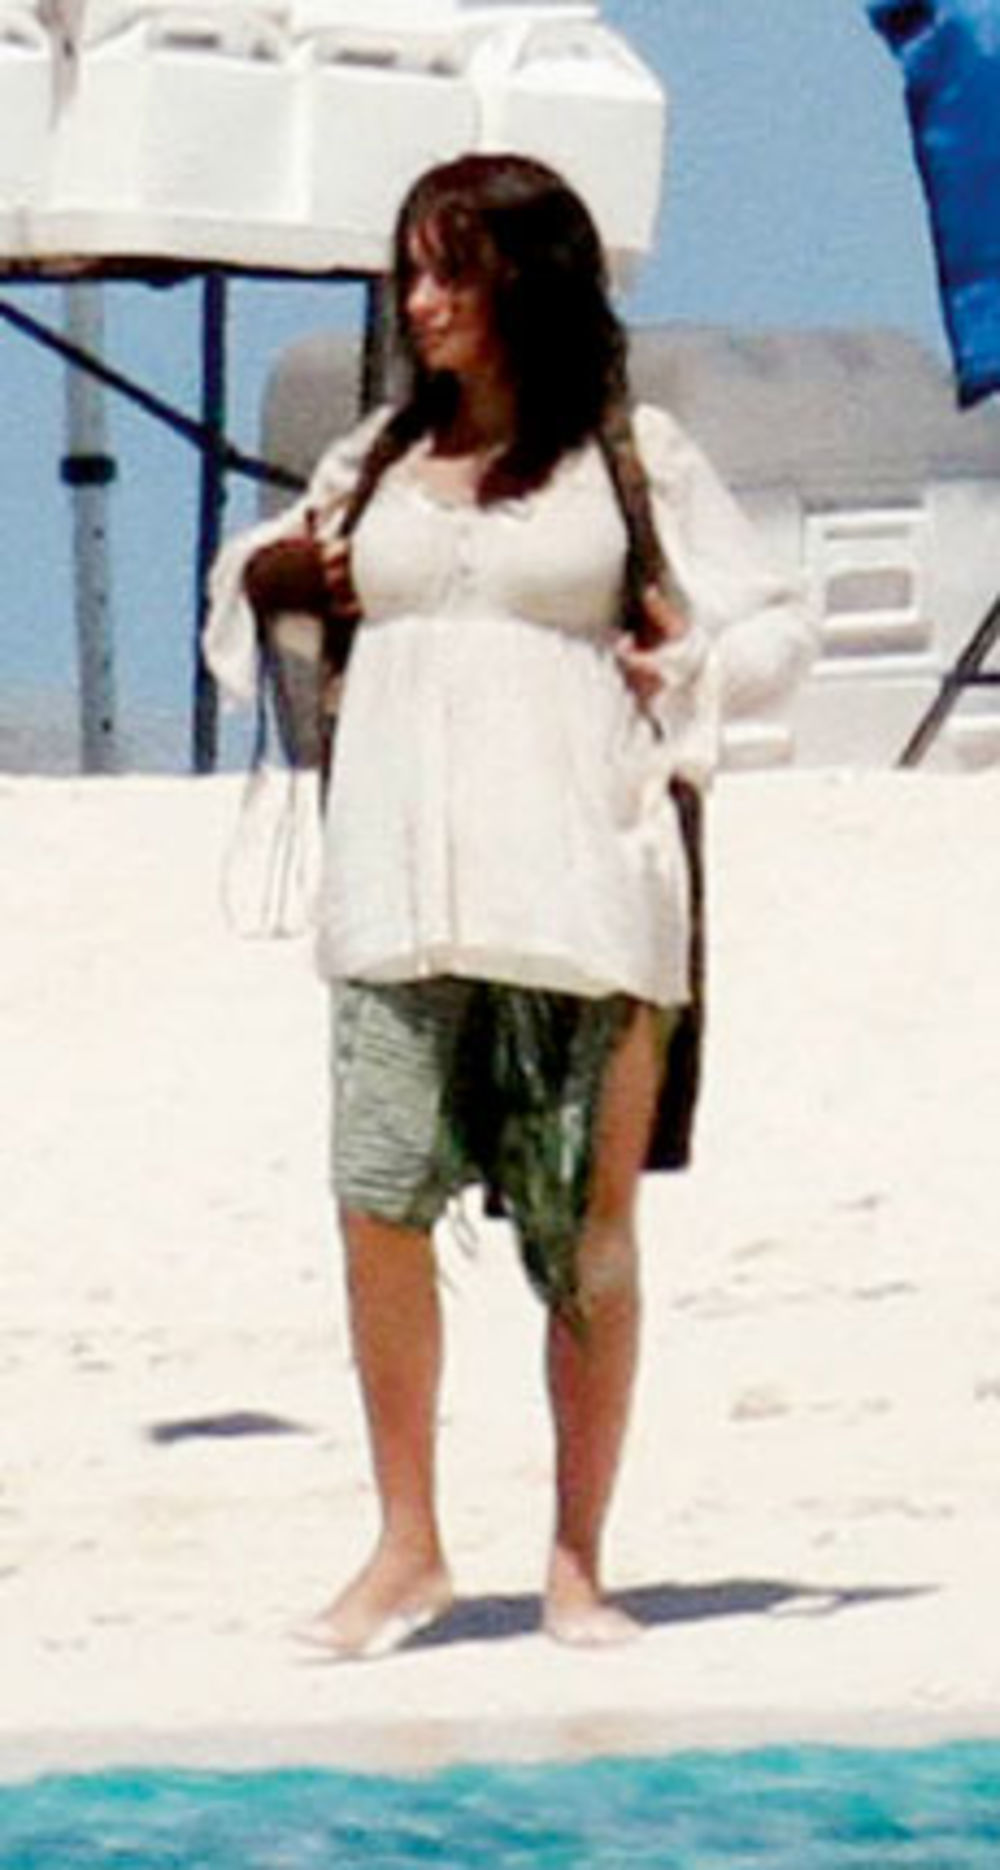 Proslavljene filmske zvezde, španska glumica Penelope Kruz (36) i njen kolega Džoni Dep (47), odlično se provode na snimanju najnovijeg nastavka sage Pirati s Kariba, čemu u prilog govore fotografije nastale na prelepim peščanim plažama na kojima se film snima